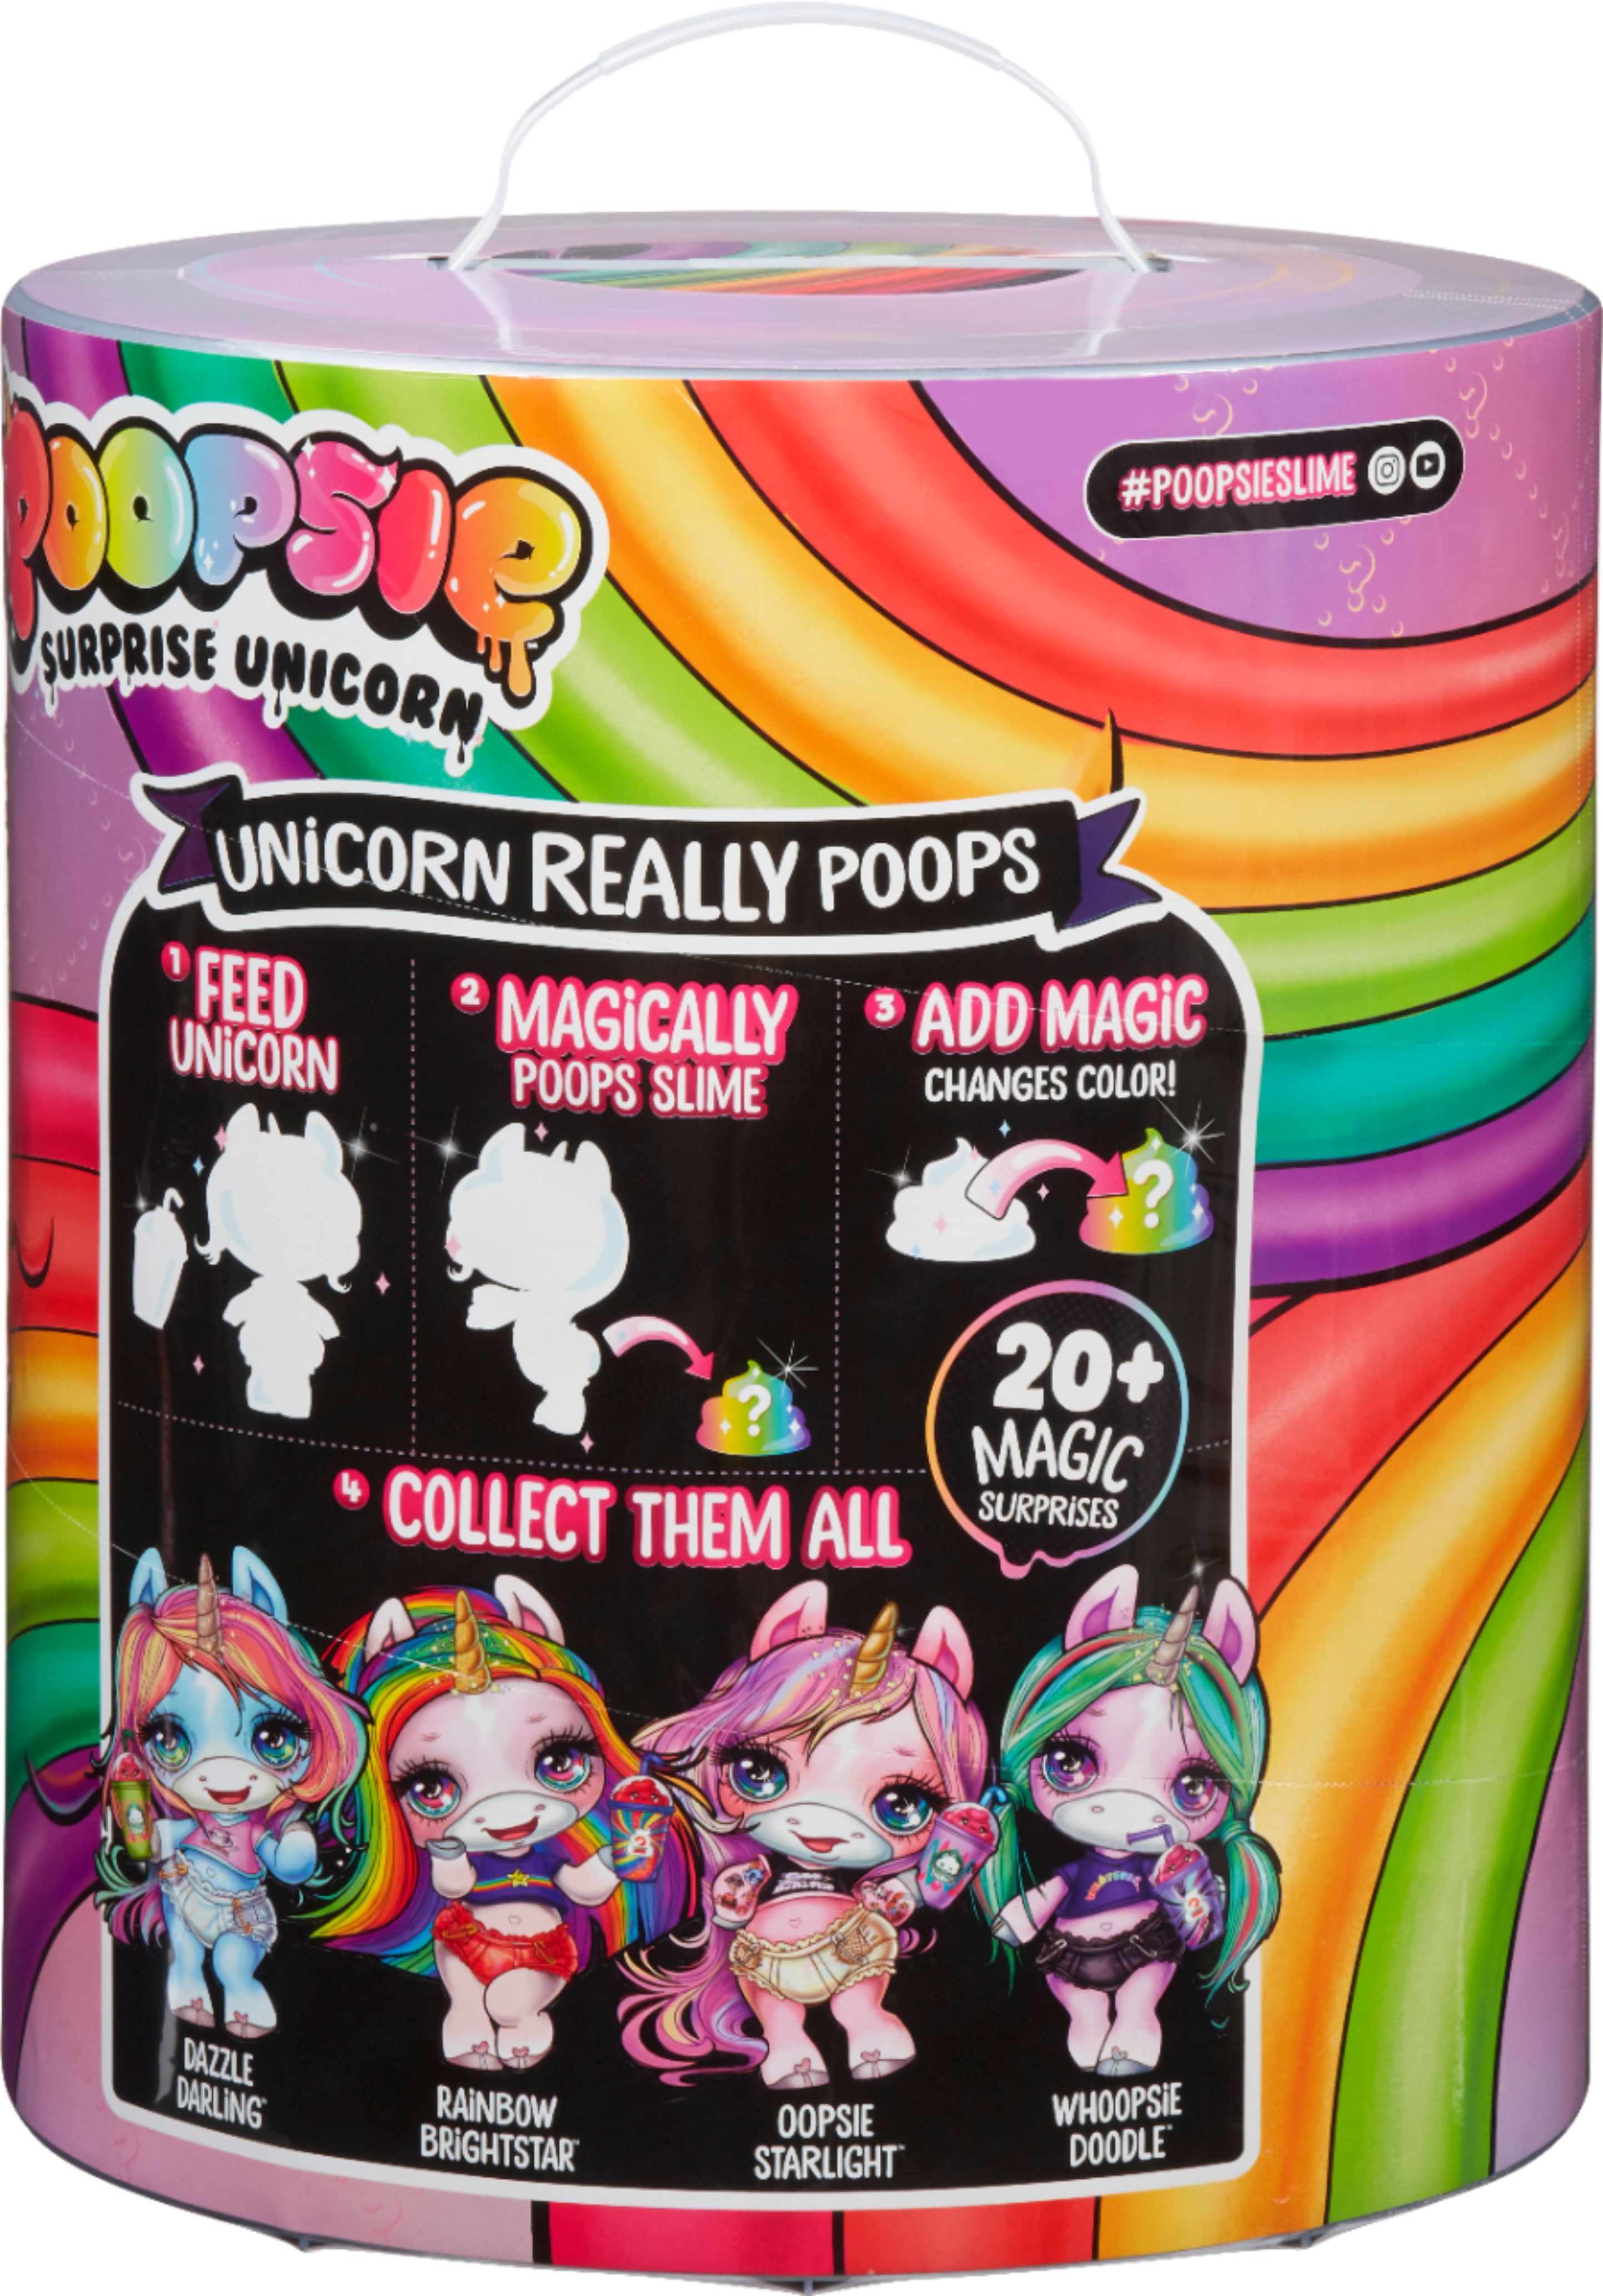 Poopsie Slime Surprise Unicorn  Poopsie Surprise Unicorn Toy